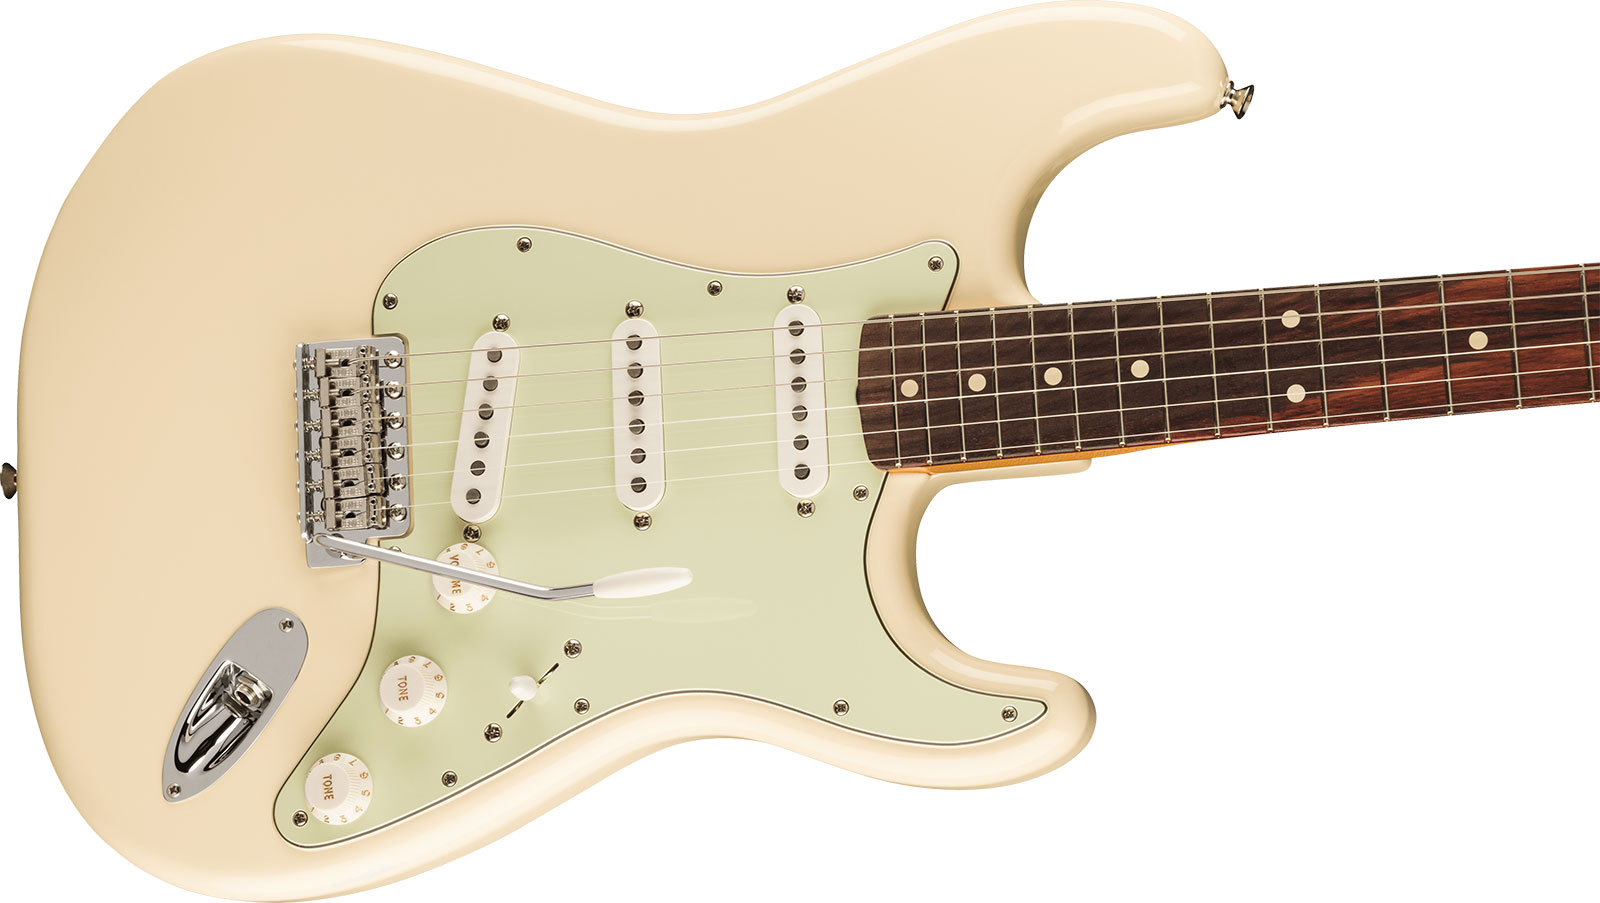 Fender Strat 60s Vintera 2 Mex 3s Trem Rw - Olympic White - Str shape electric guitar - Variation 2